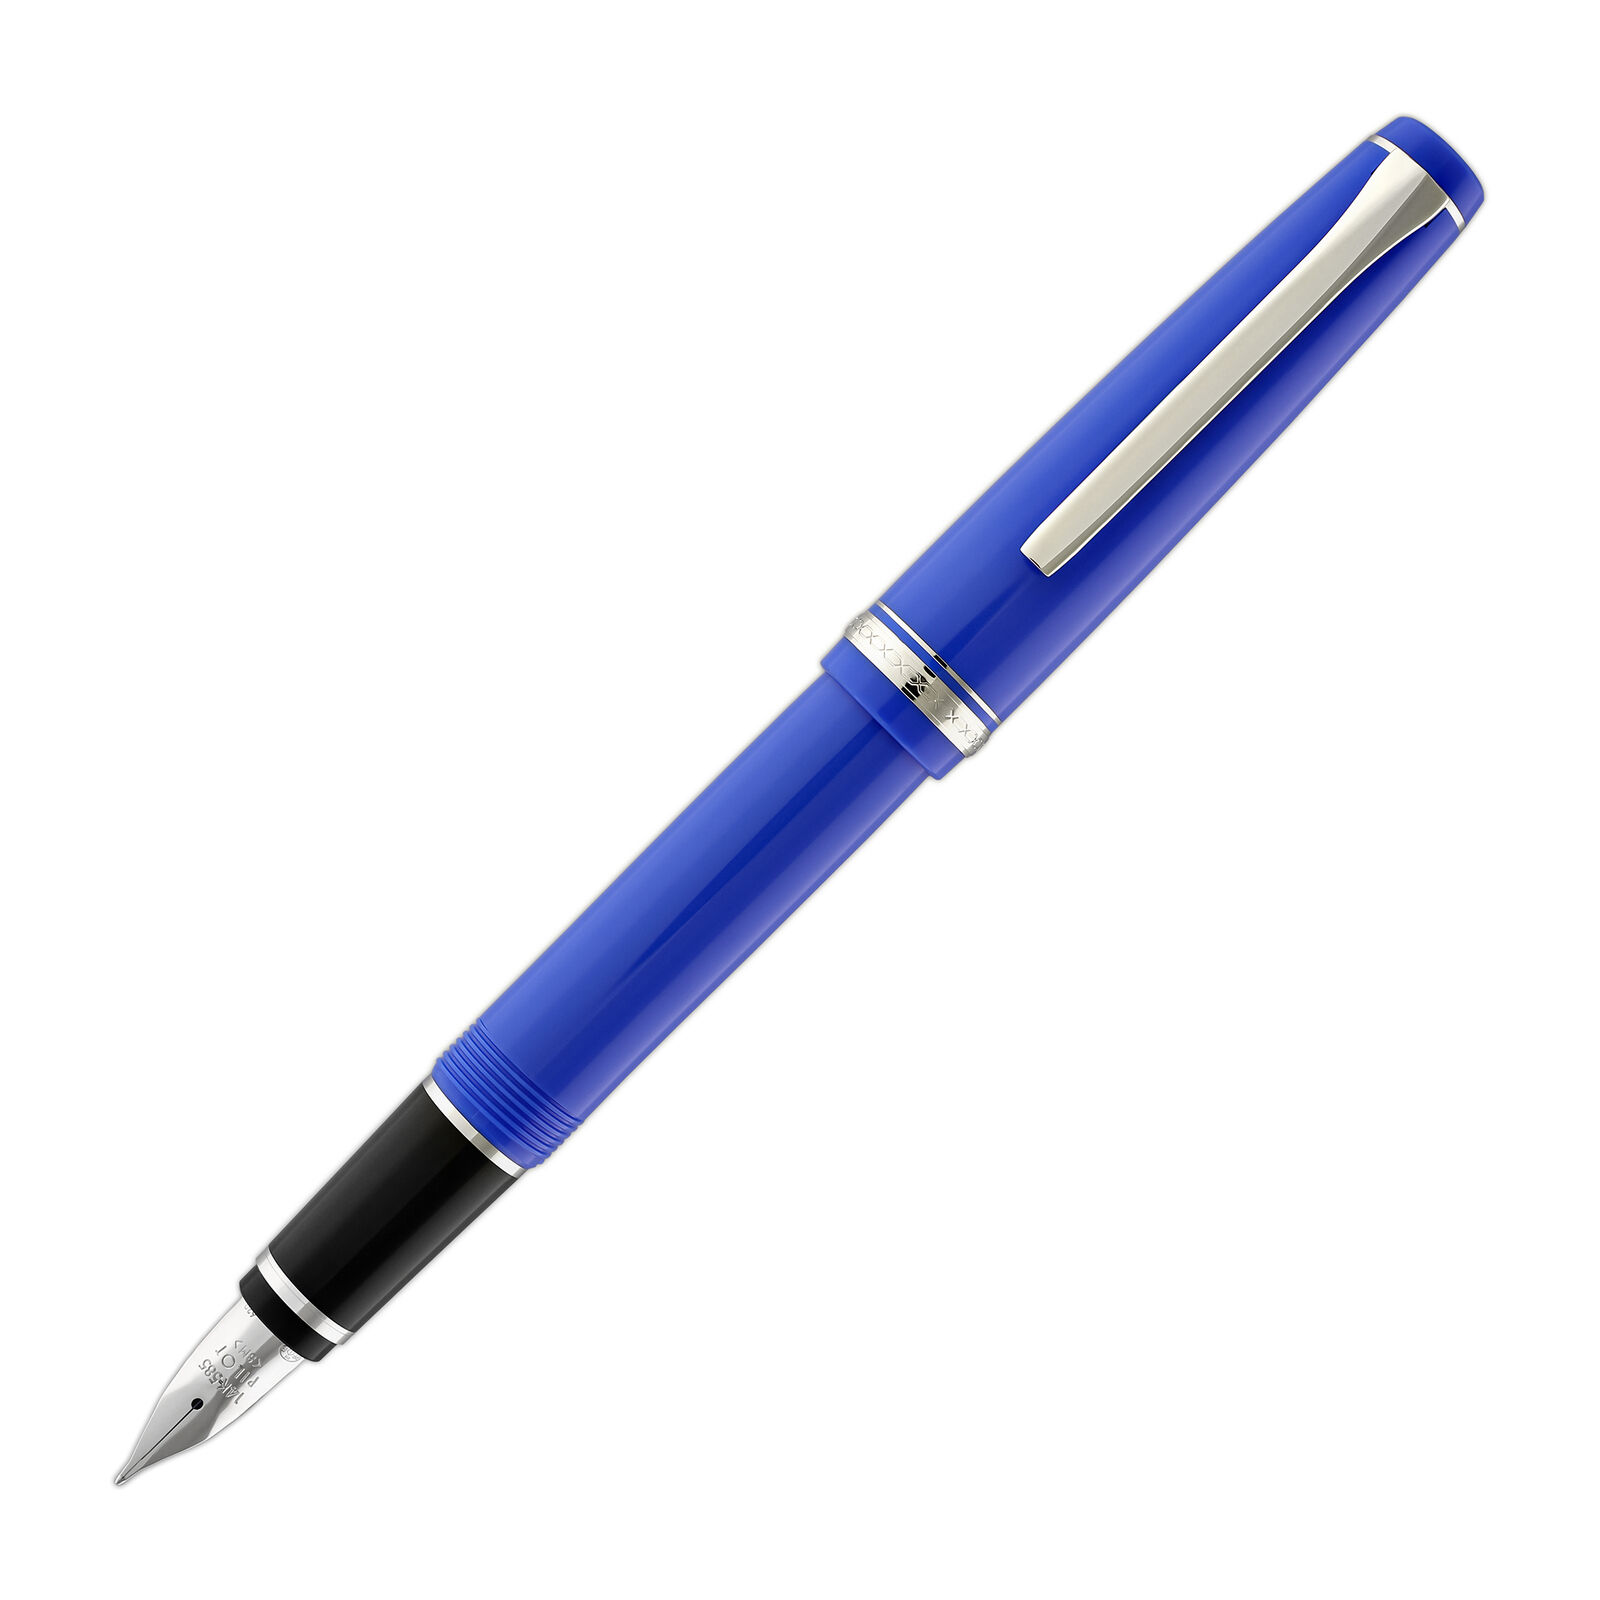 Pilot Falcon Fountain Pen in Resin Blue - Soft Flexible Extra Fine Point -New